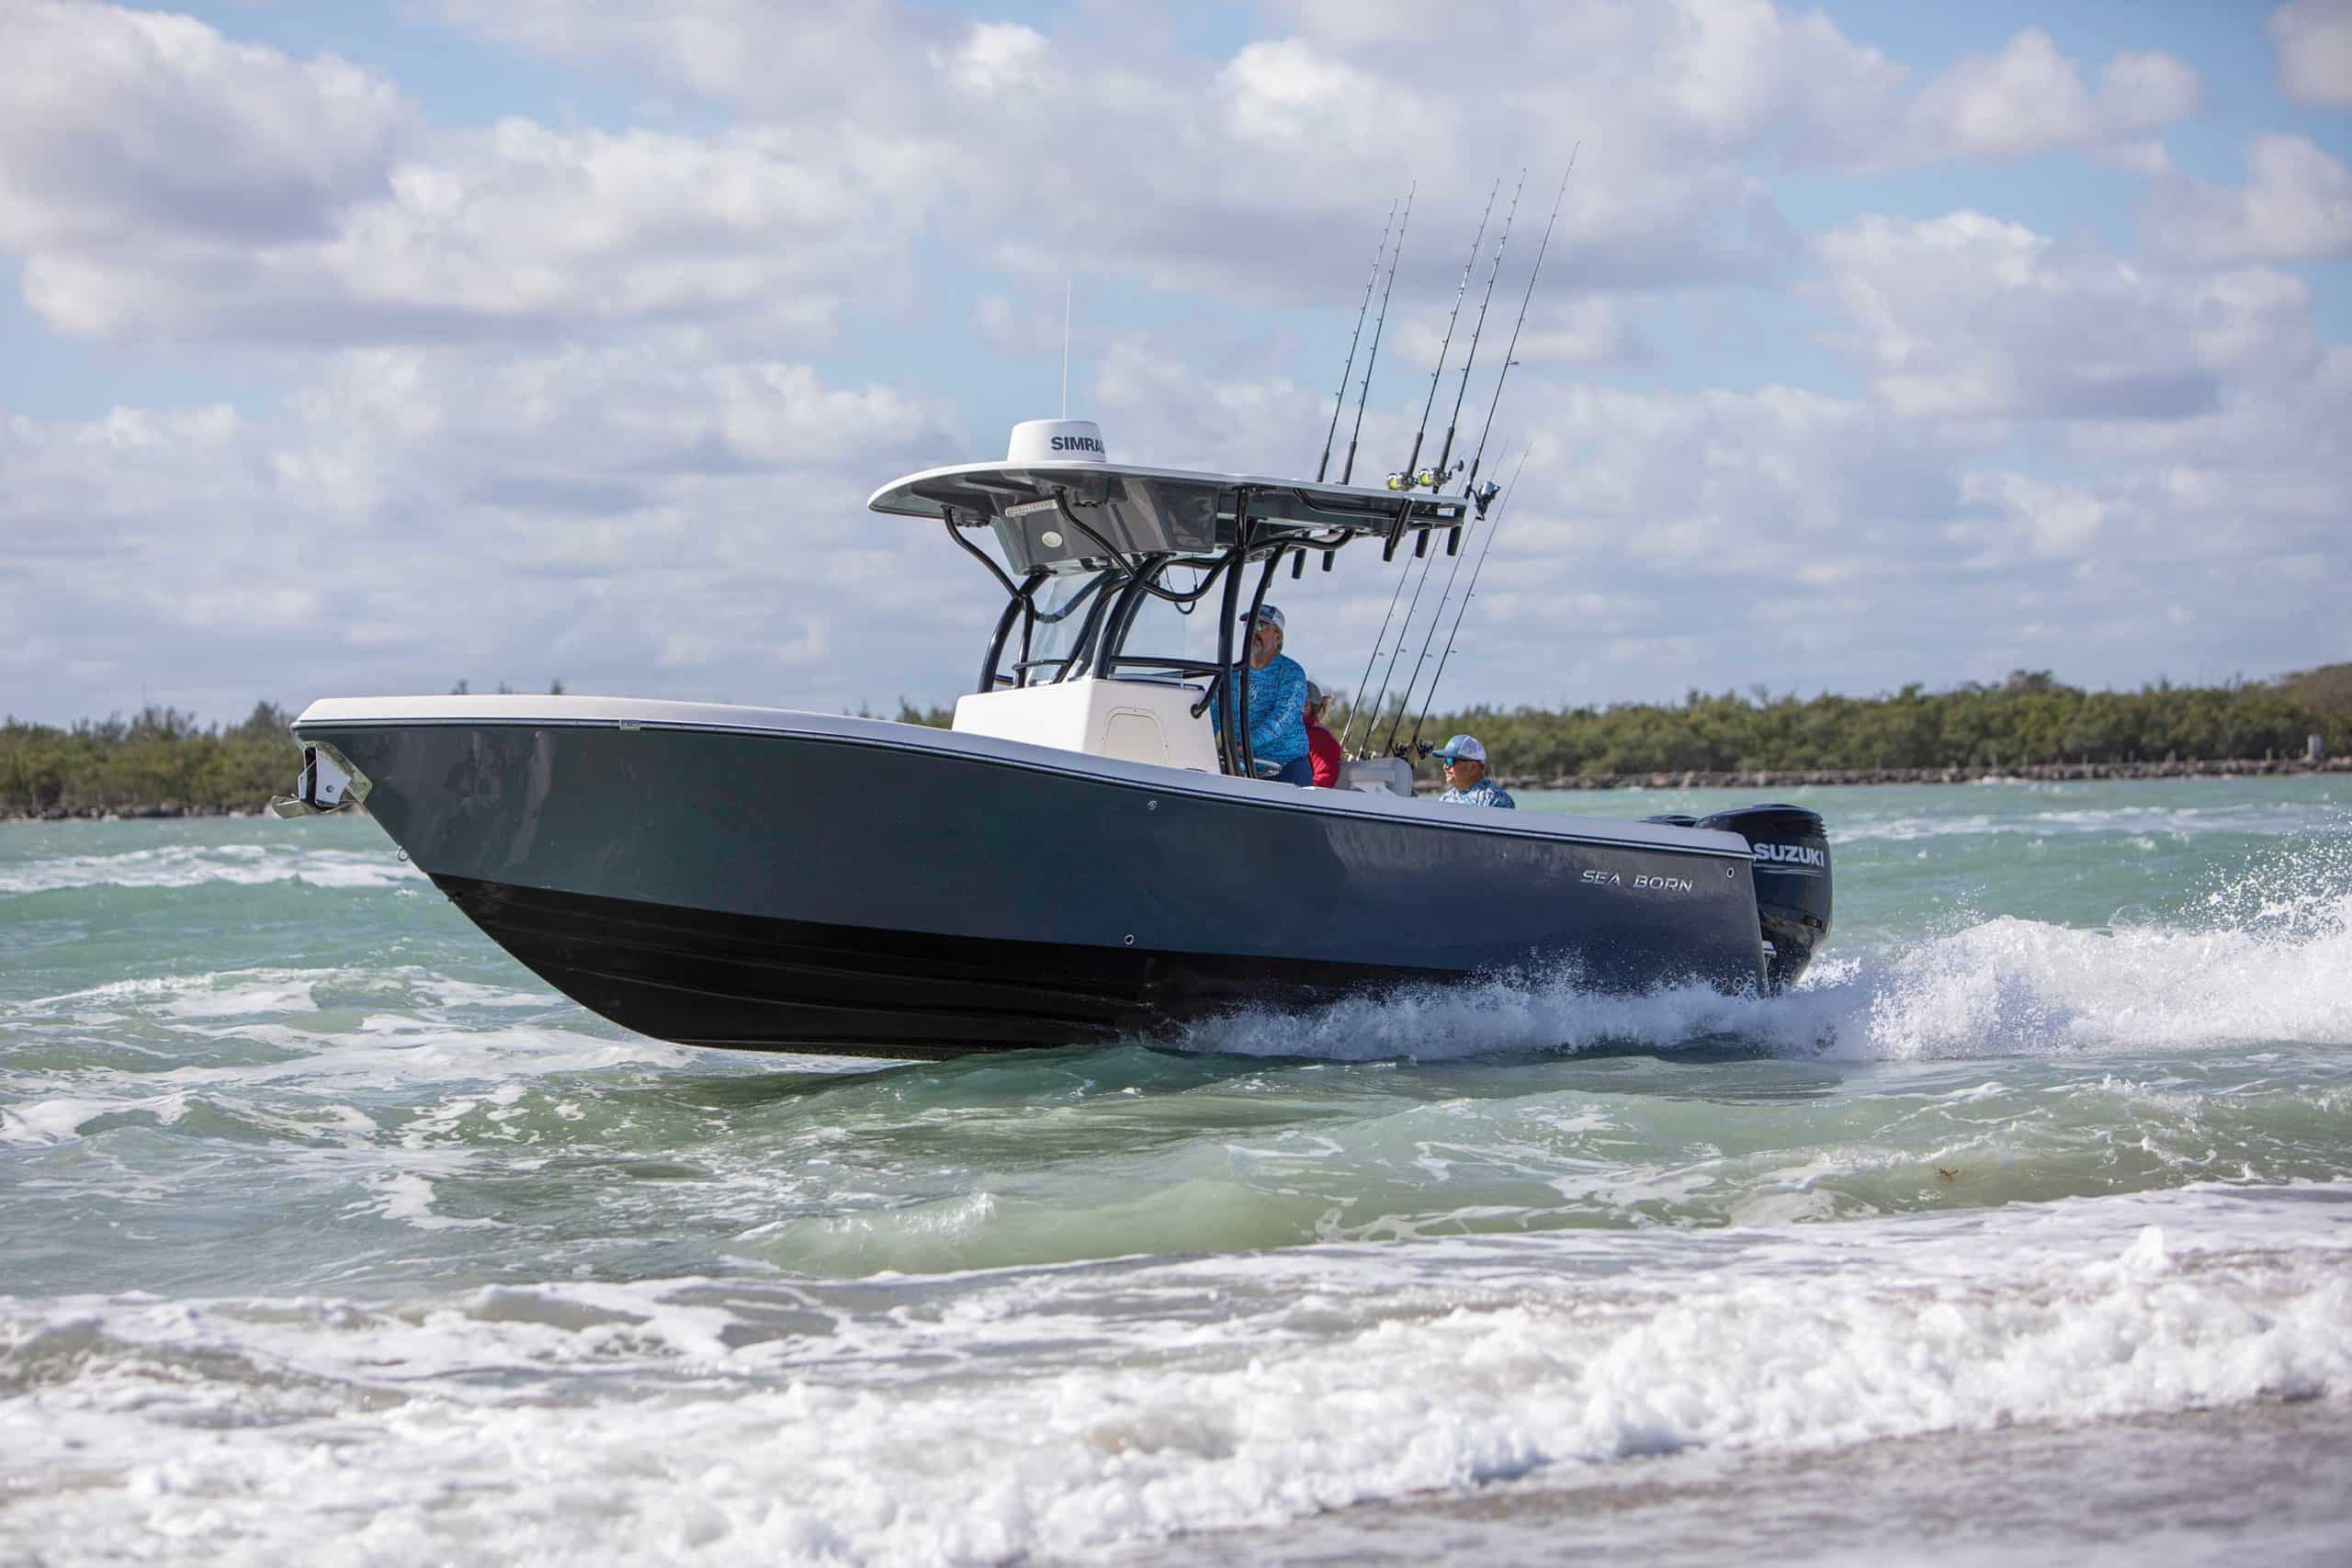 2021 Sea Born LX26 XLT Boat Test, Pricing, Specs